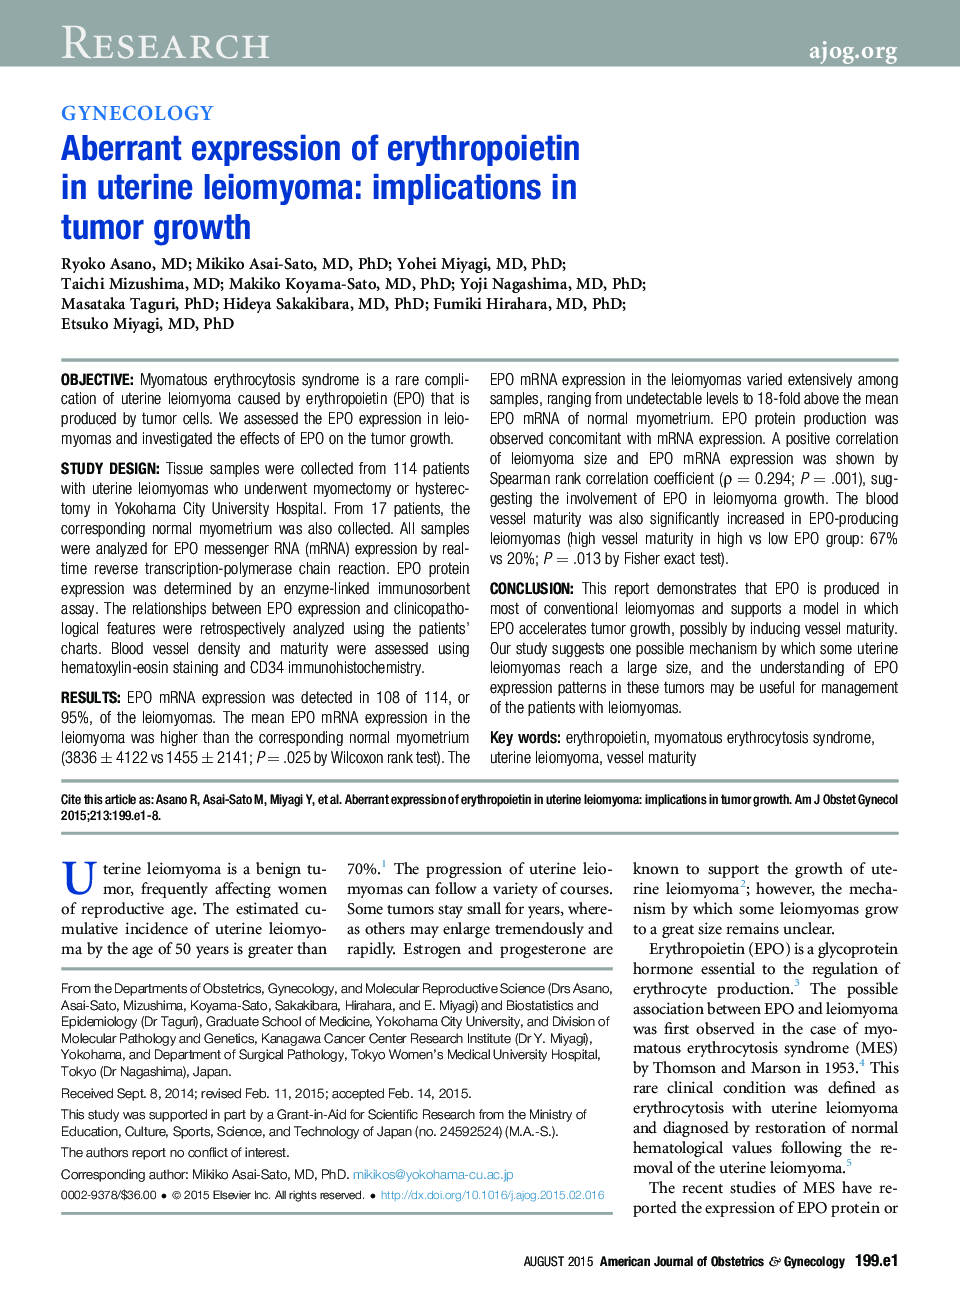 Aberrant expression of erythropoietin in uterine leiomyoma: implications in tumor growth